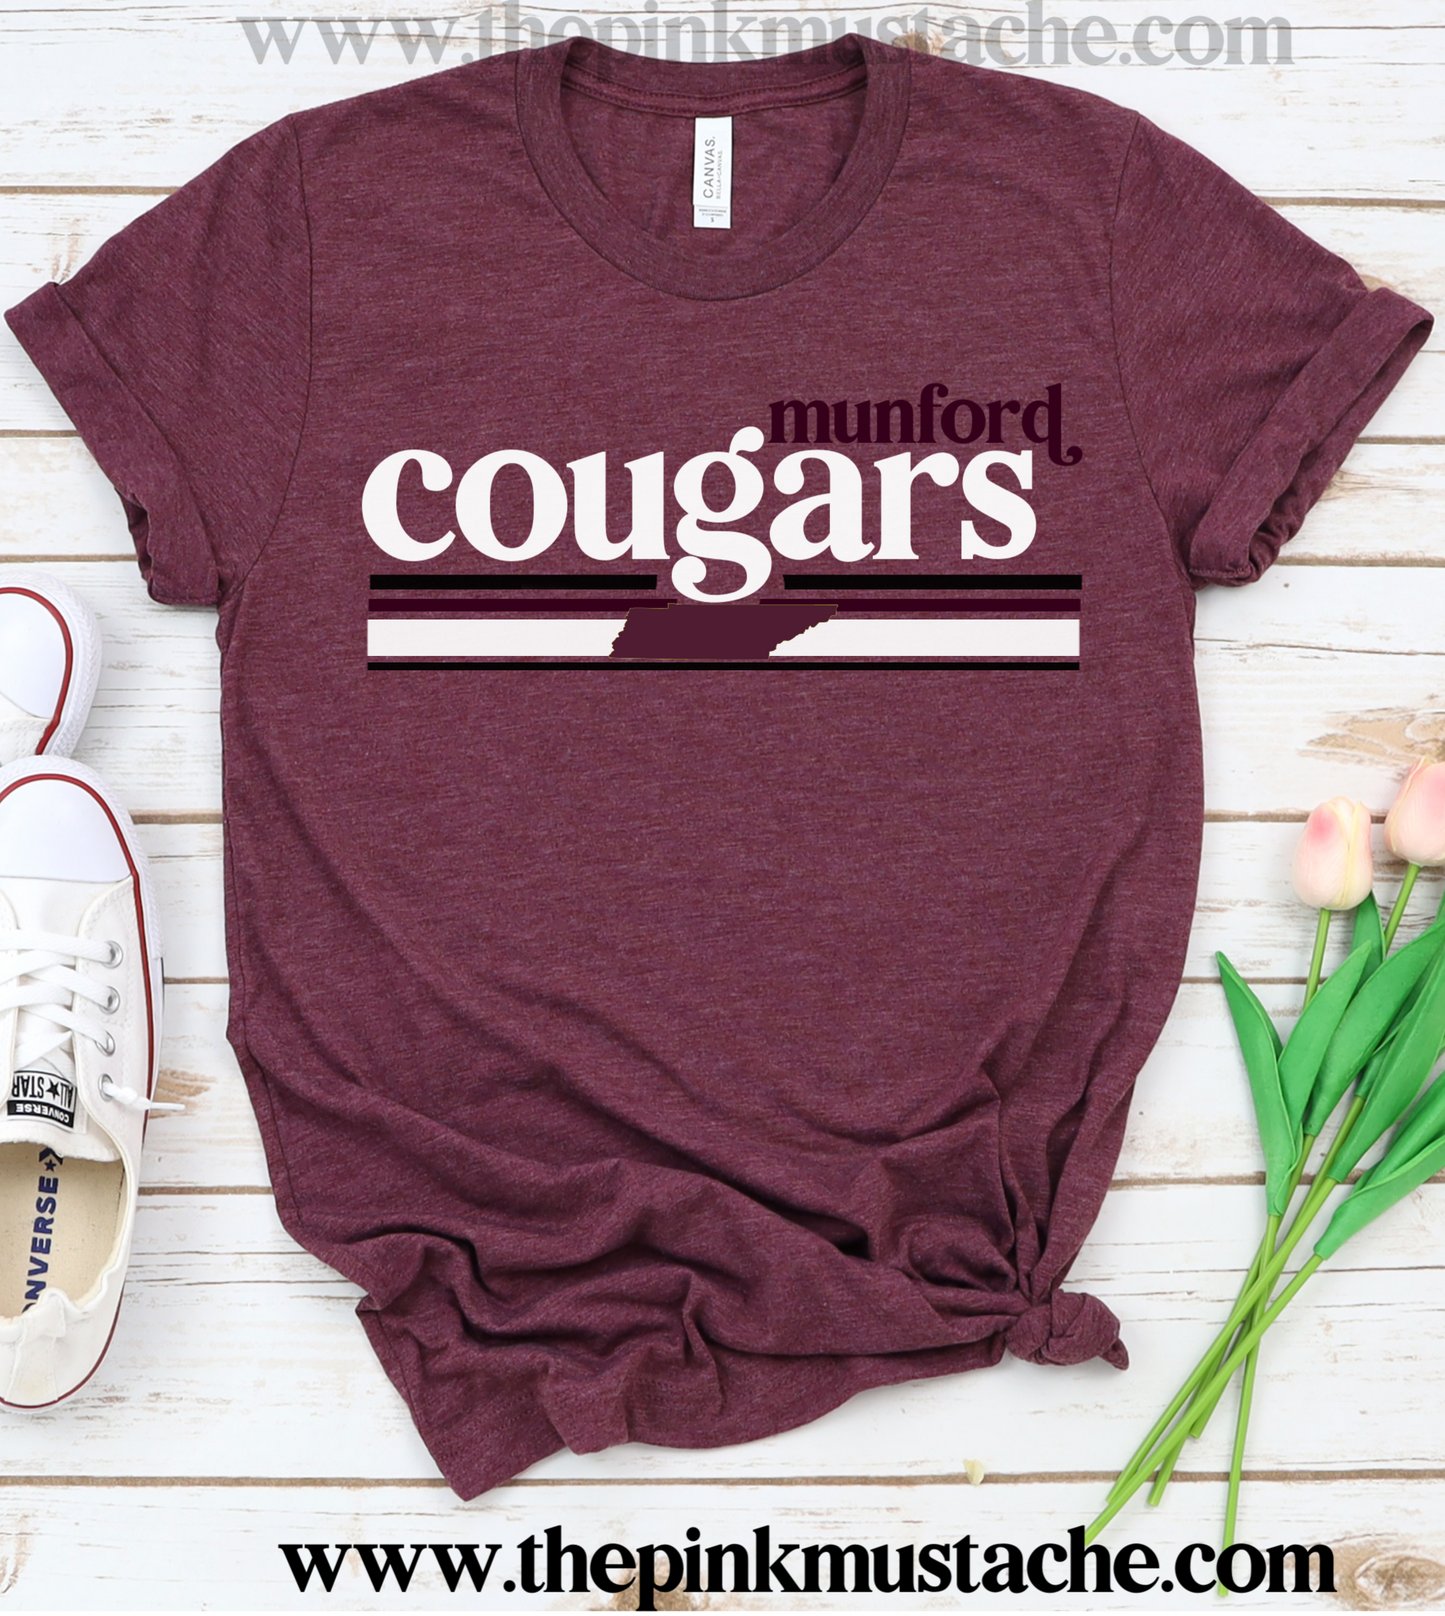 Munford Cougars Tee /Bella Canvas T-Shirt